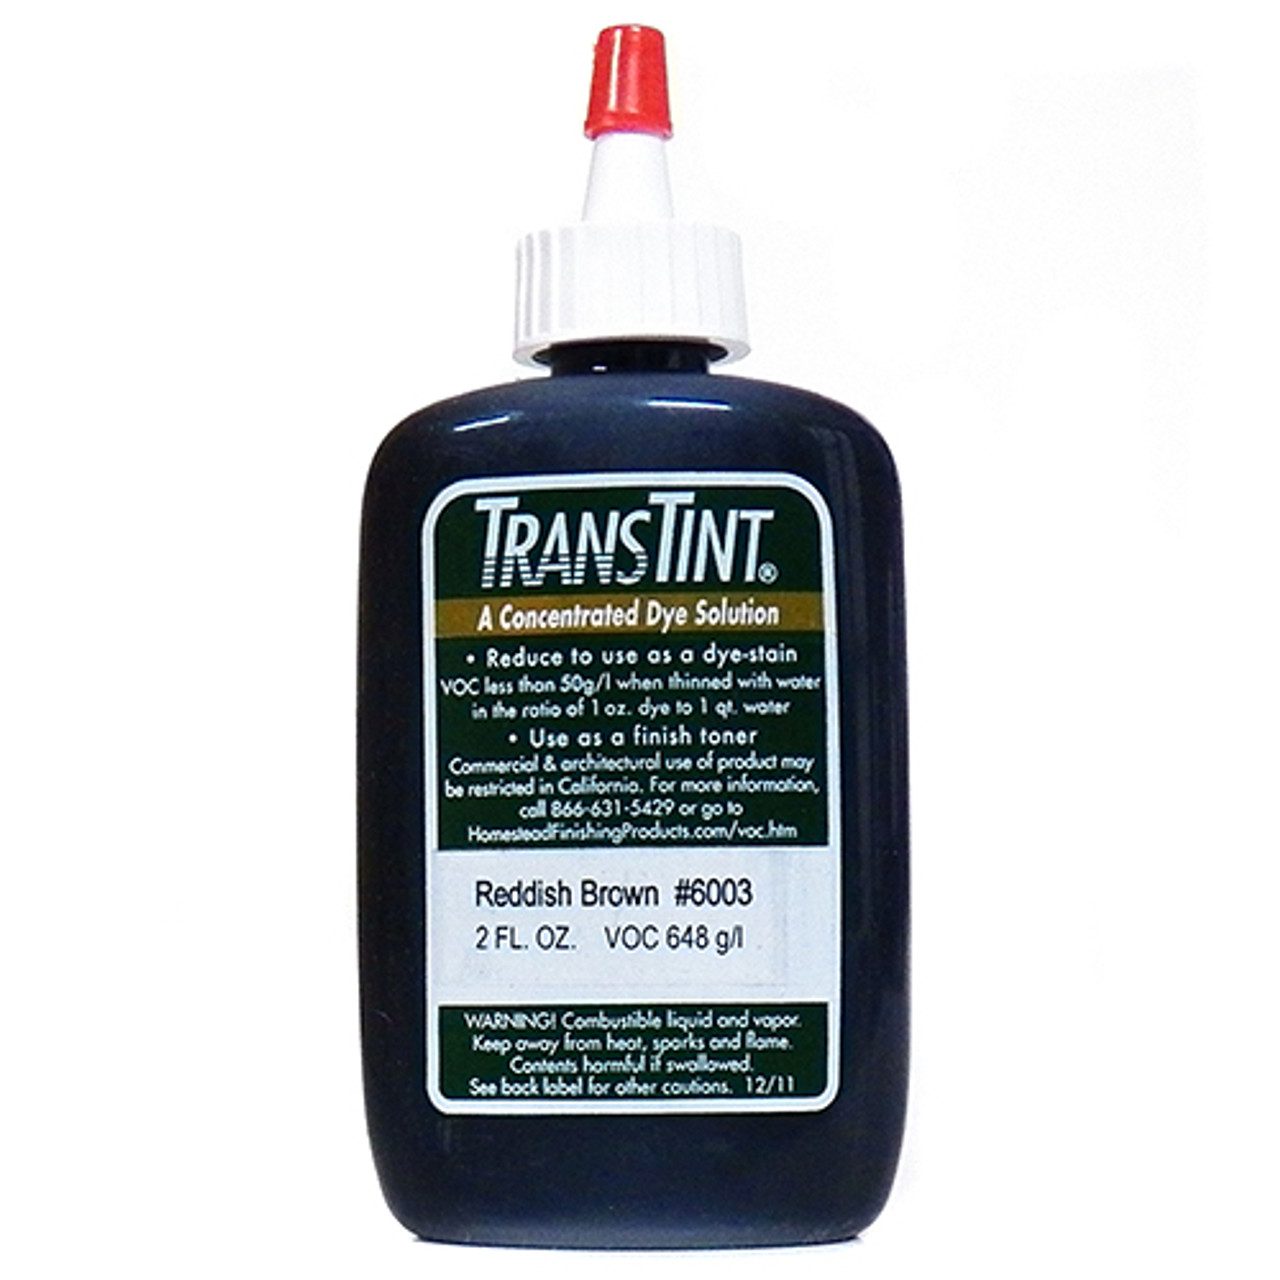 Trans Tint, Non-Grain Raising, Universal Dye Concentrate, Reddish Brown Makes 1/2 Gallon Dye Solution